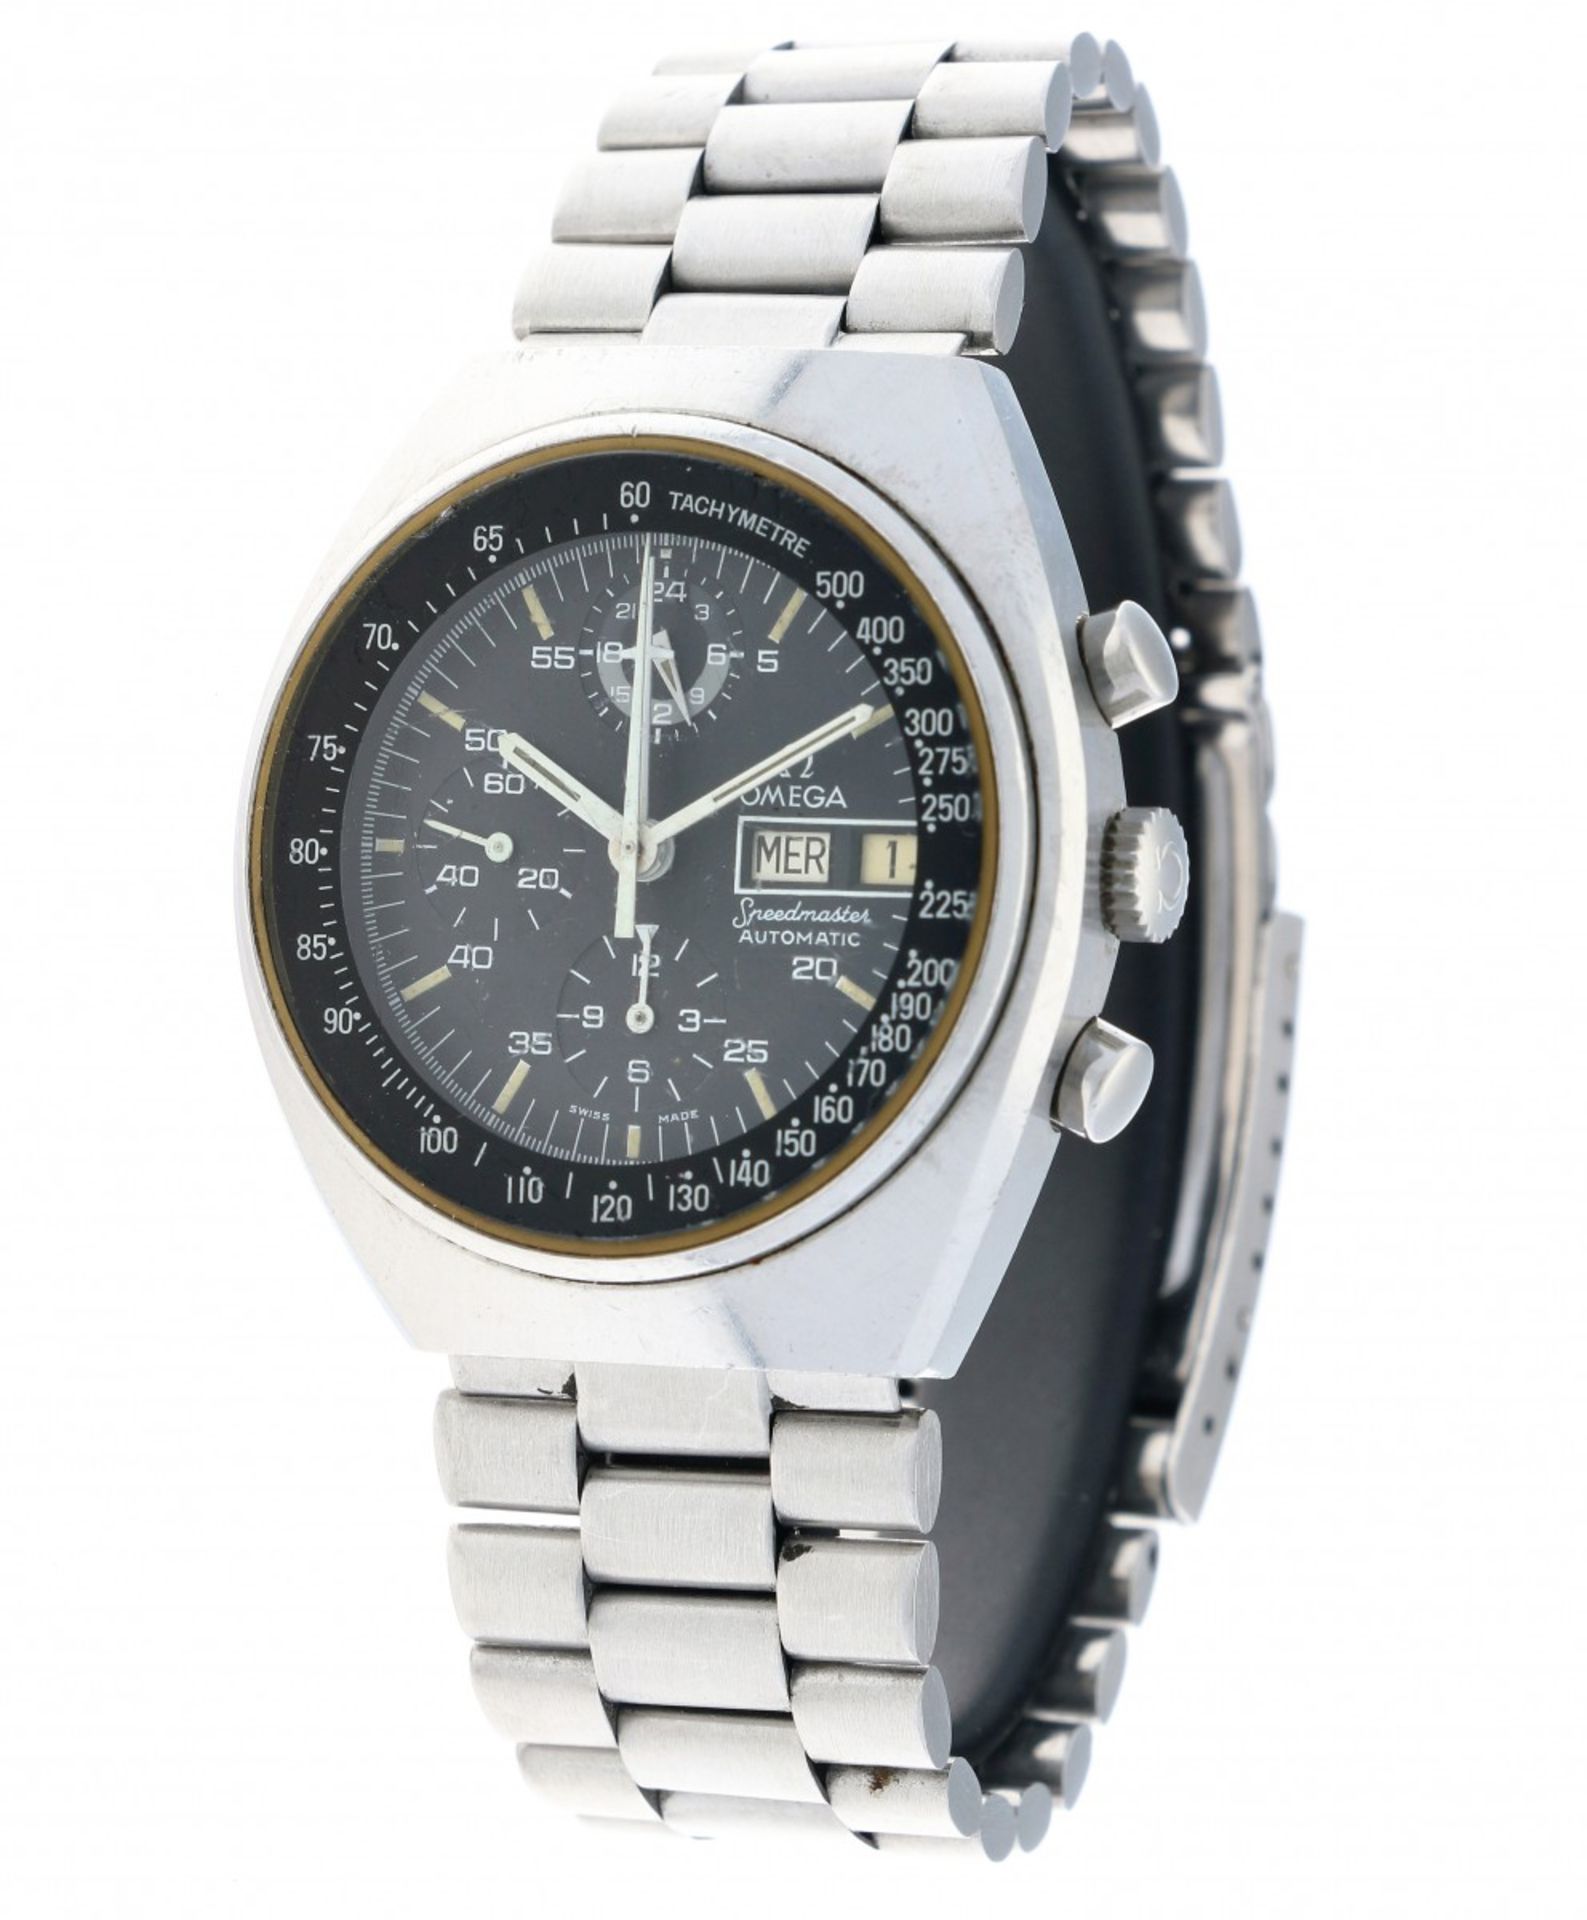 Omega Speedmaster mark 4.5 176.0012 - Men's watch - Approx. 1975. - Image 2 of 8